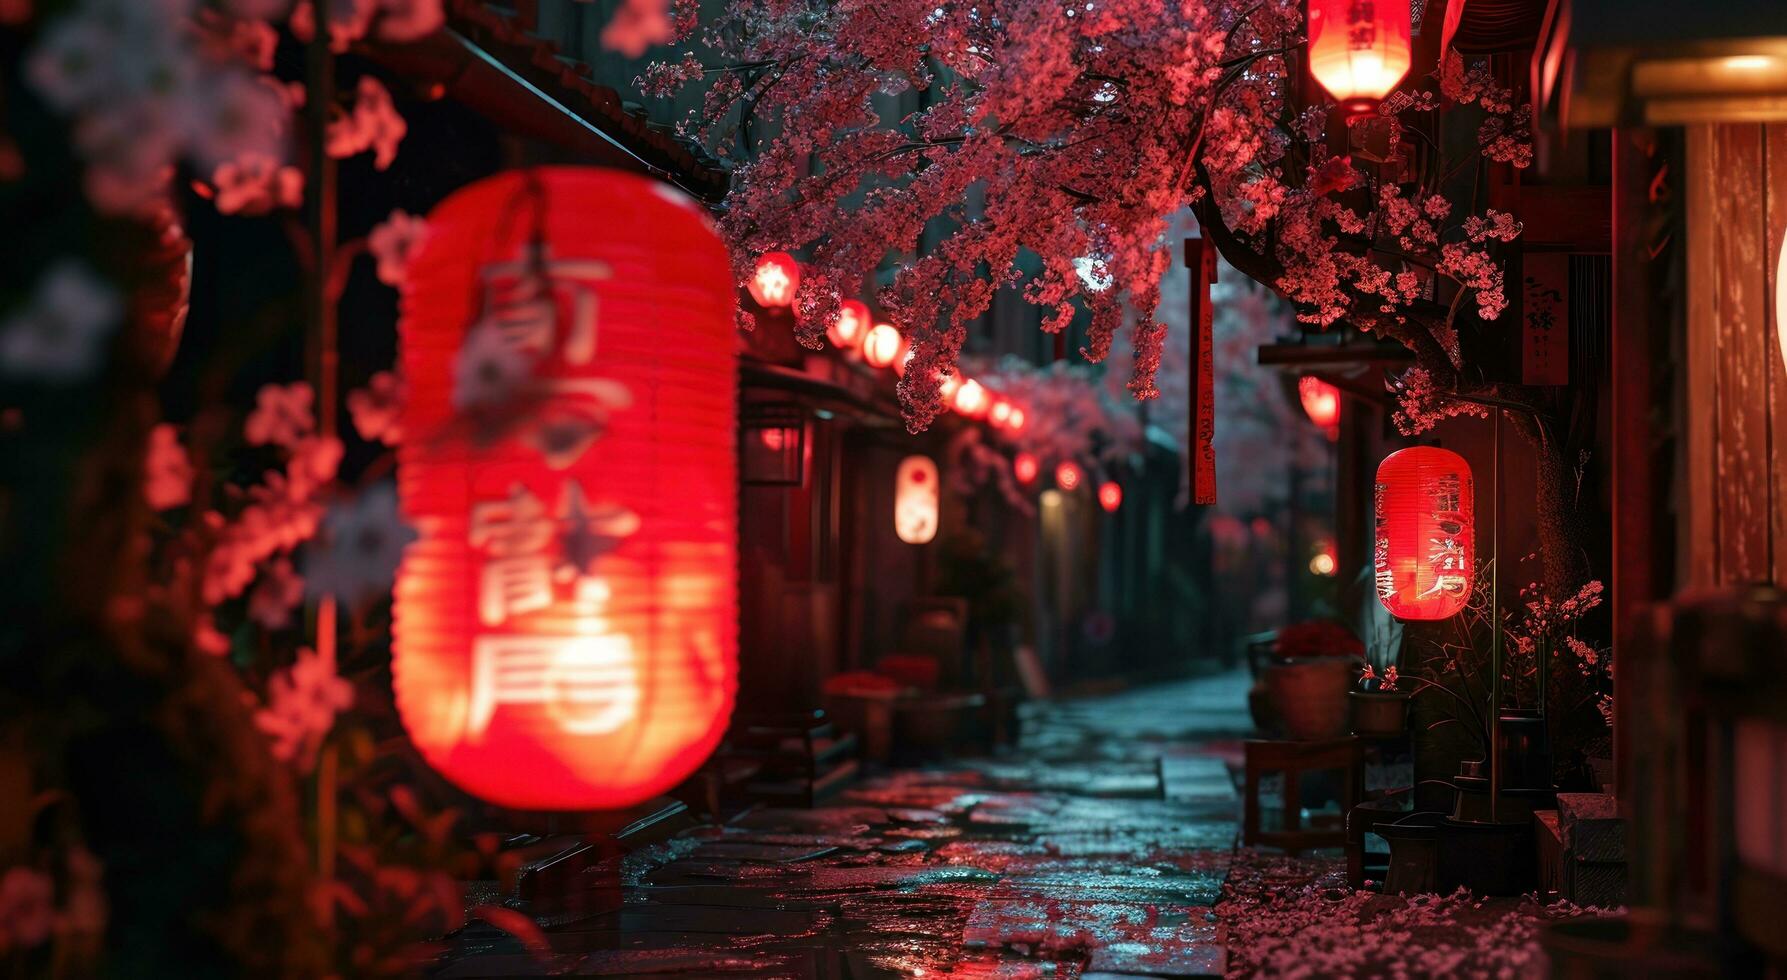 AI generated a red lantern hanging on a lantern street photo